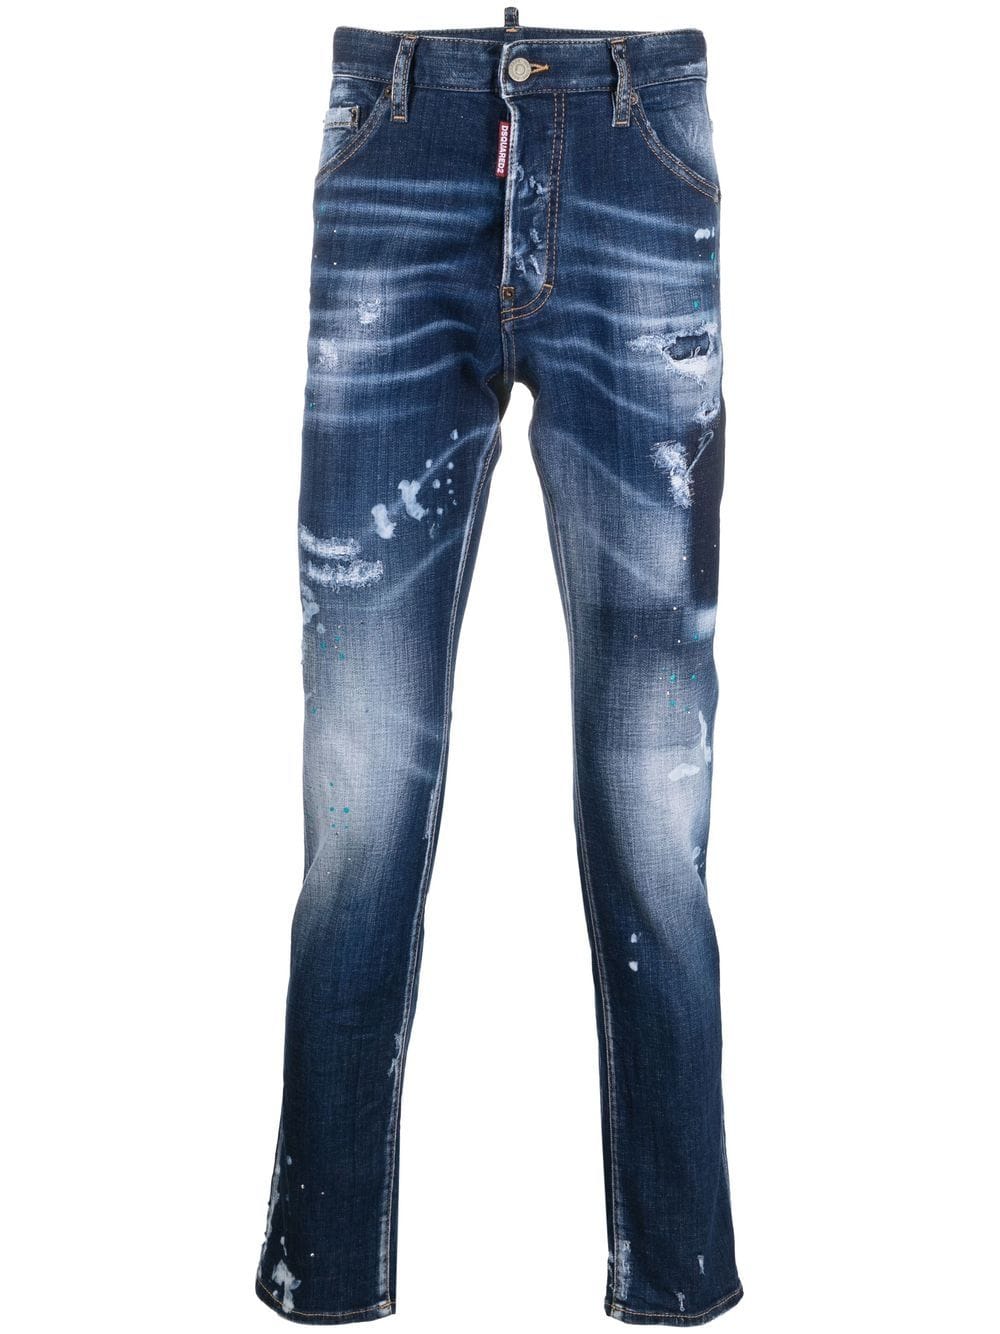 Dsquared2 Tiffany Skinny-Jeans in Distressed-Look - Blau von Dsquared2